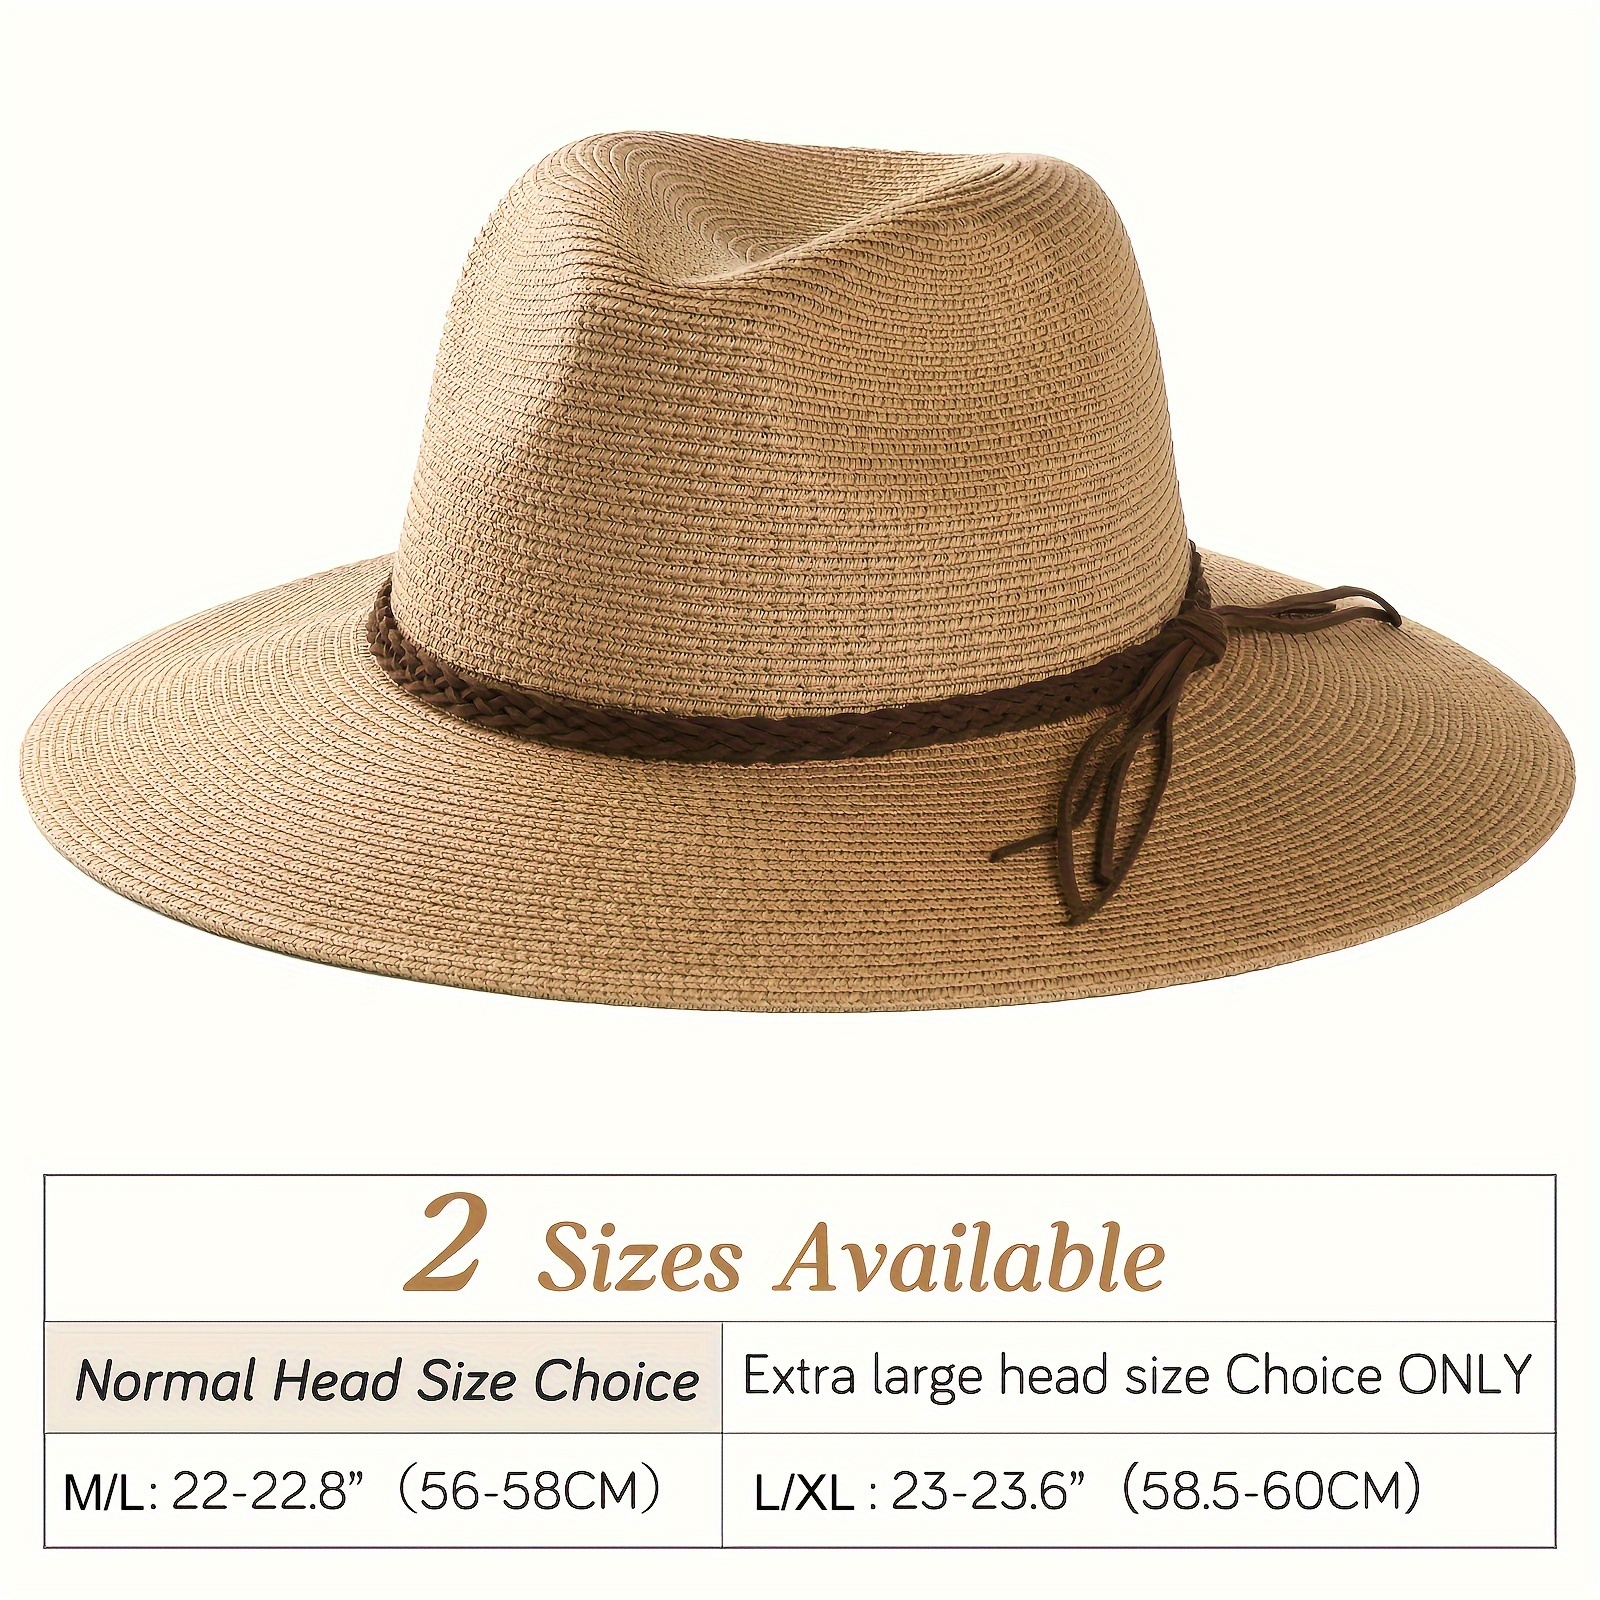 Women's Sun Hat, Hats for Women, Women's Beach Hats – Panama